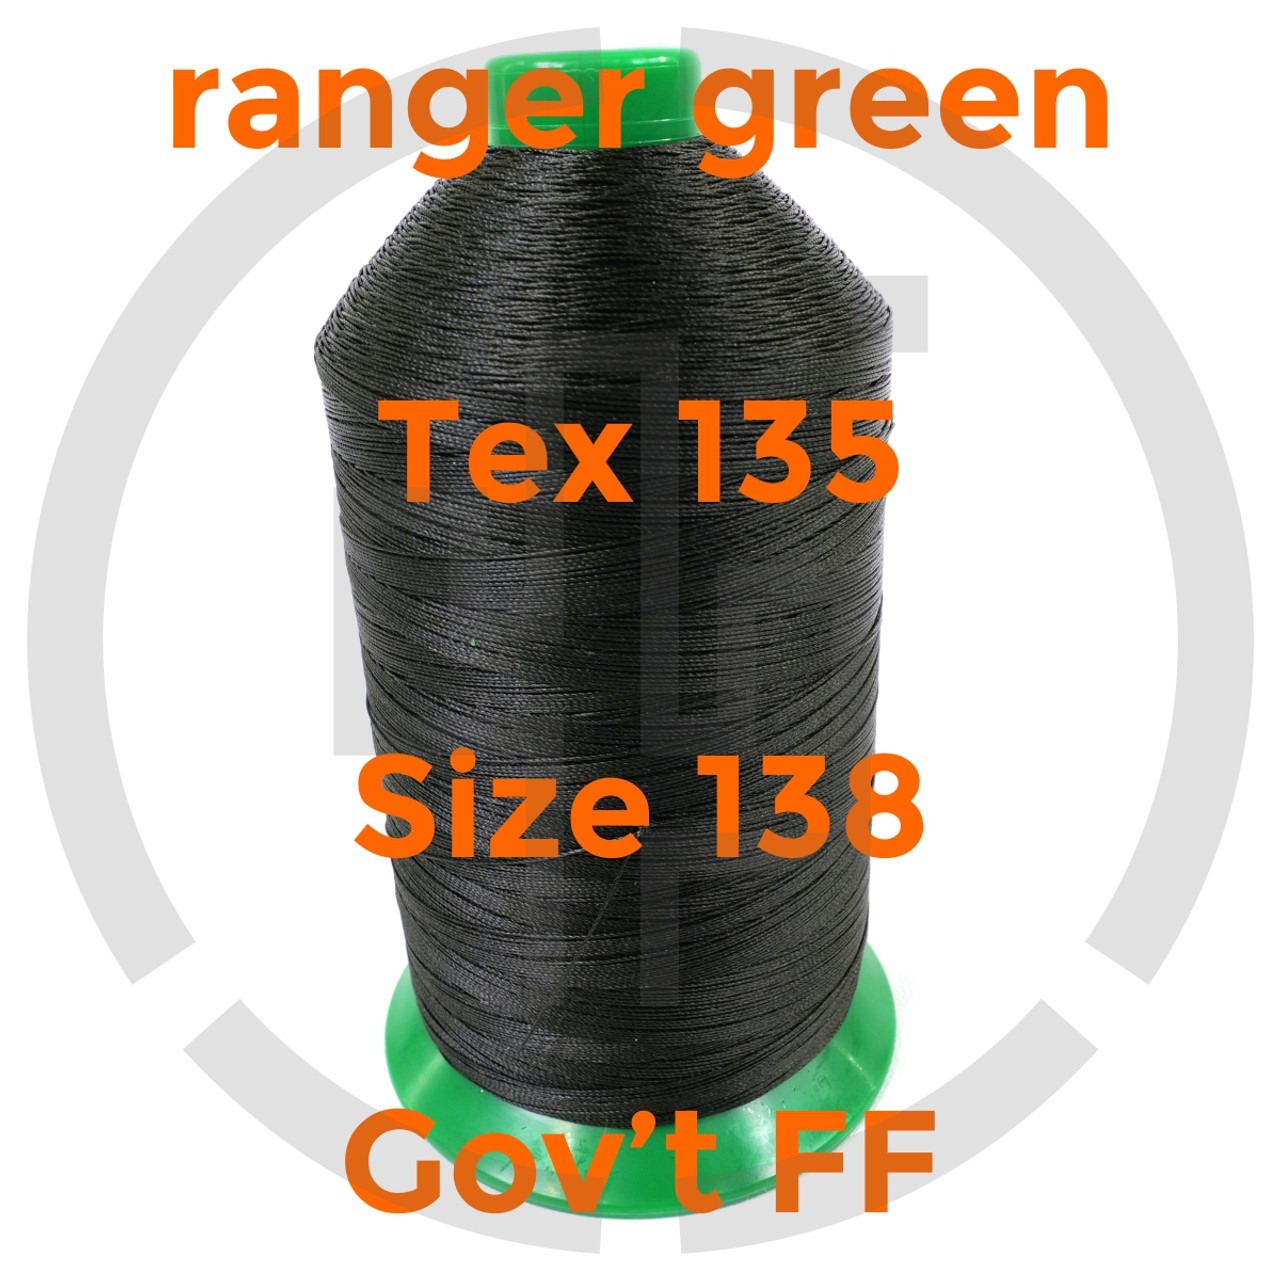 Bonded Nylon Thread, Fil-Tec 69 Black